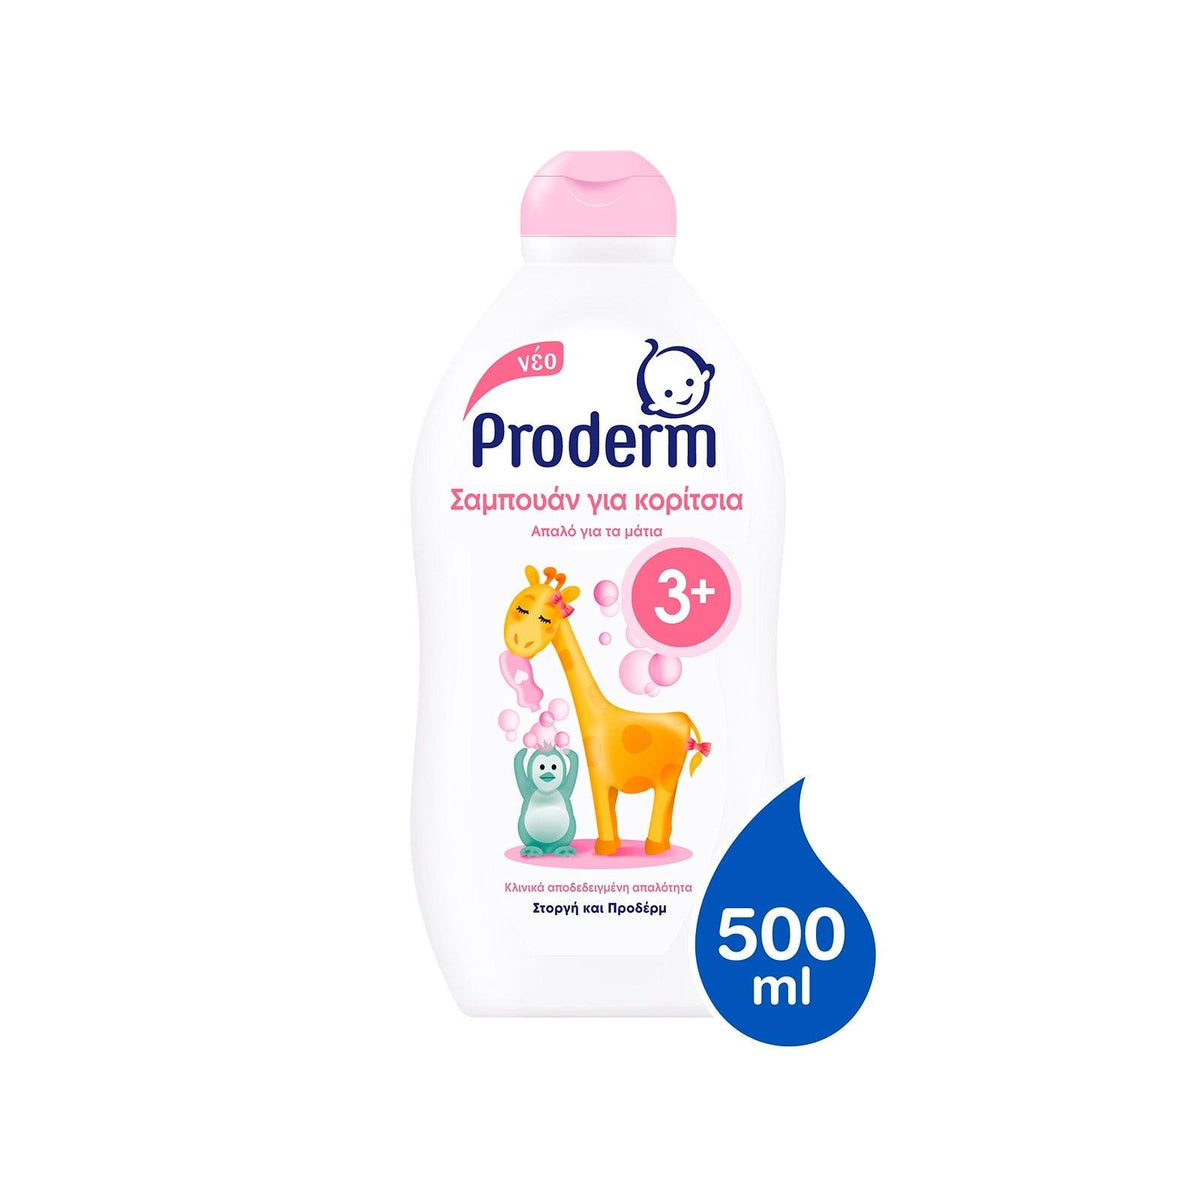 Proderm Kids' Shampoo 500ML - Mari Kali Stores Cyprus